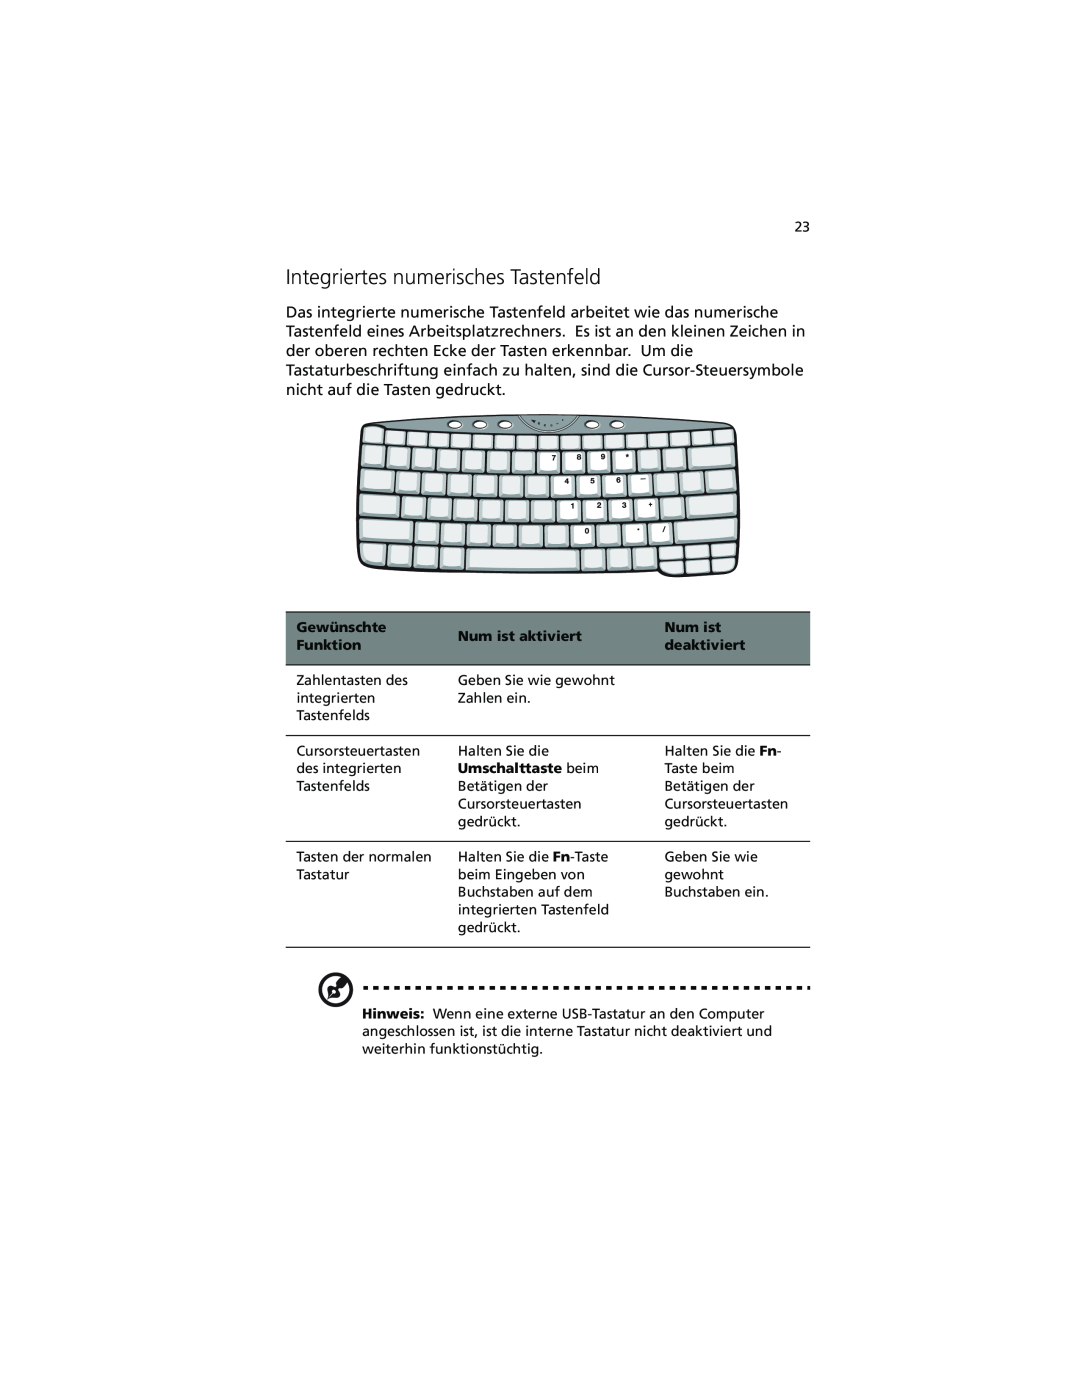 Acer C100-Series manual Integriertes numerisches Tastenfeld 